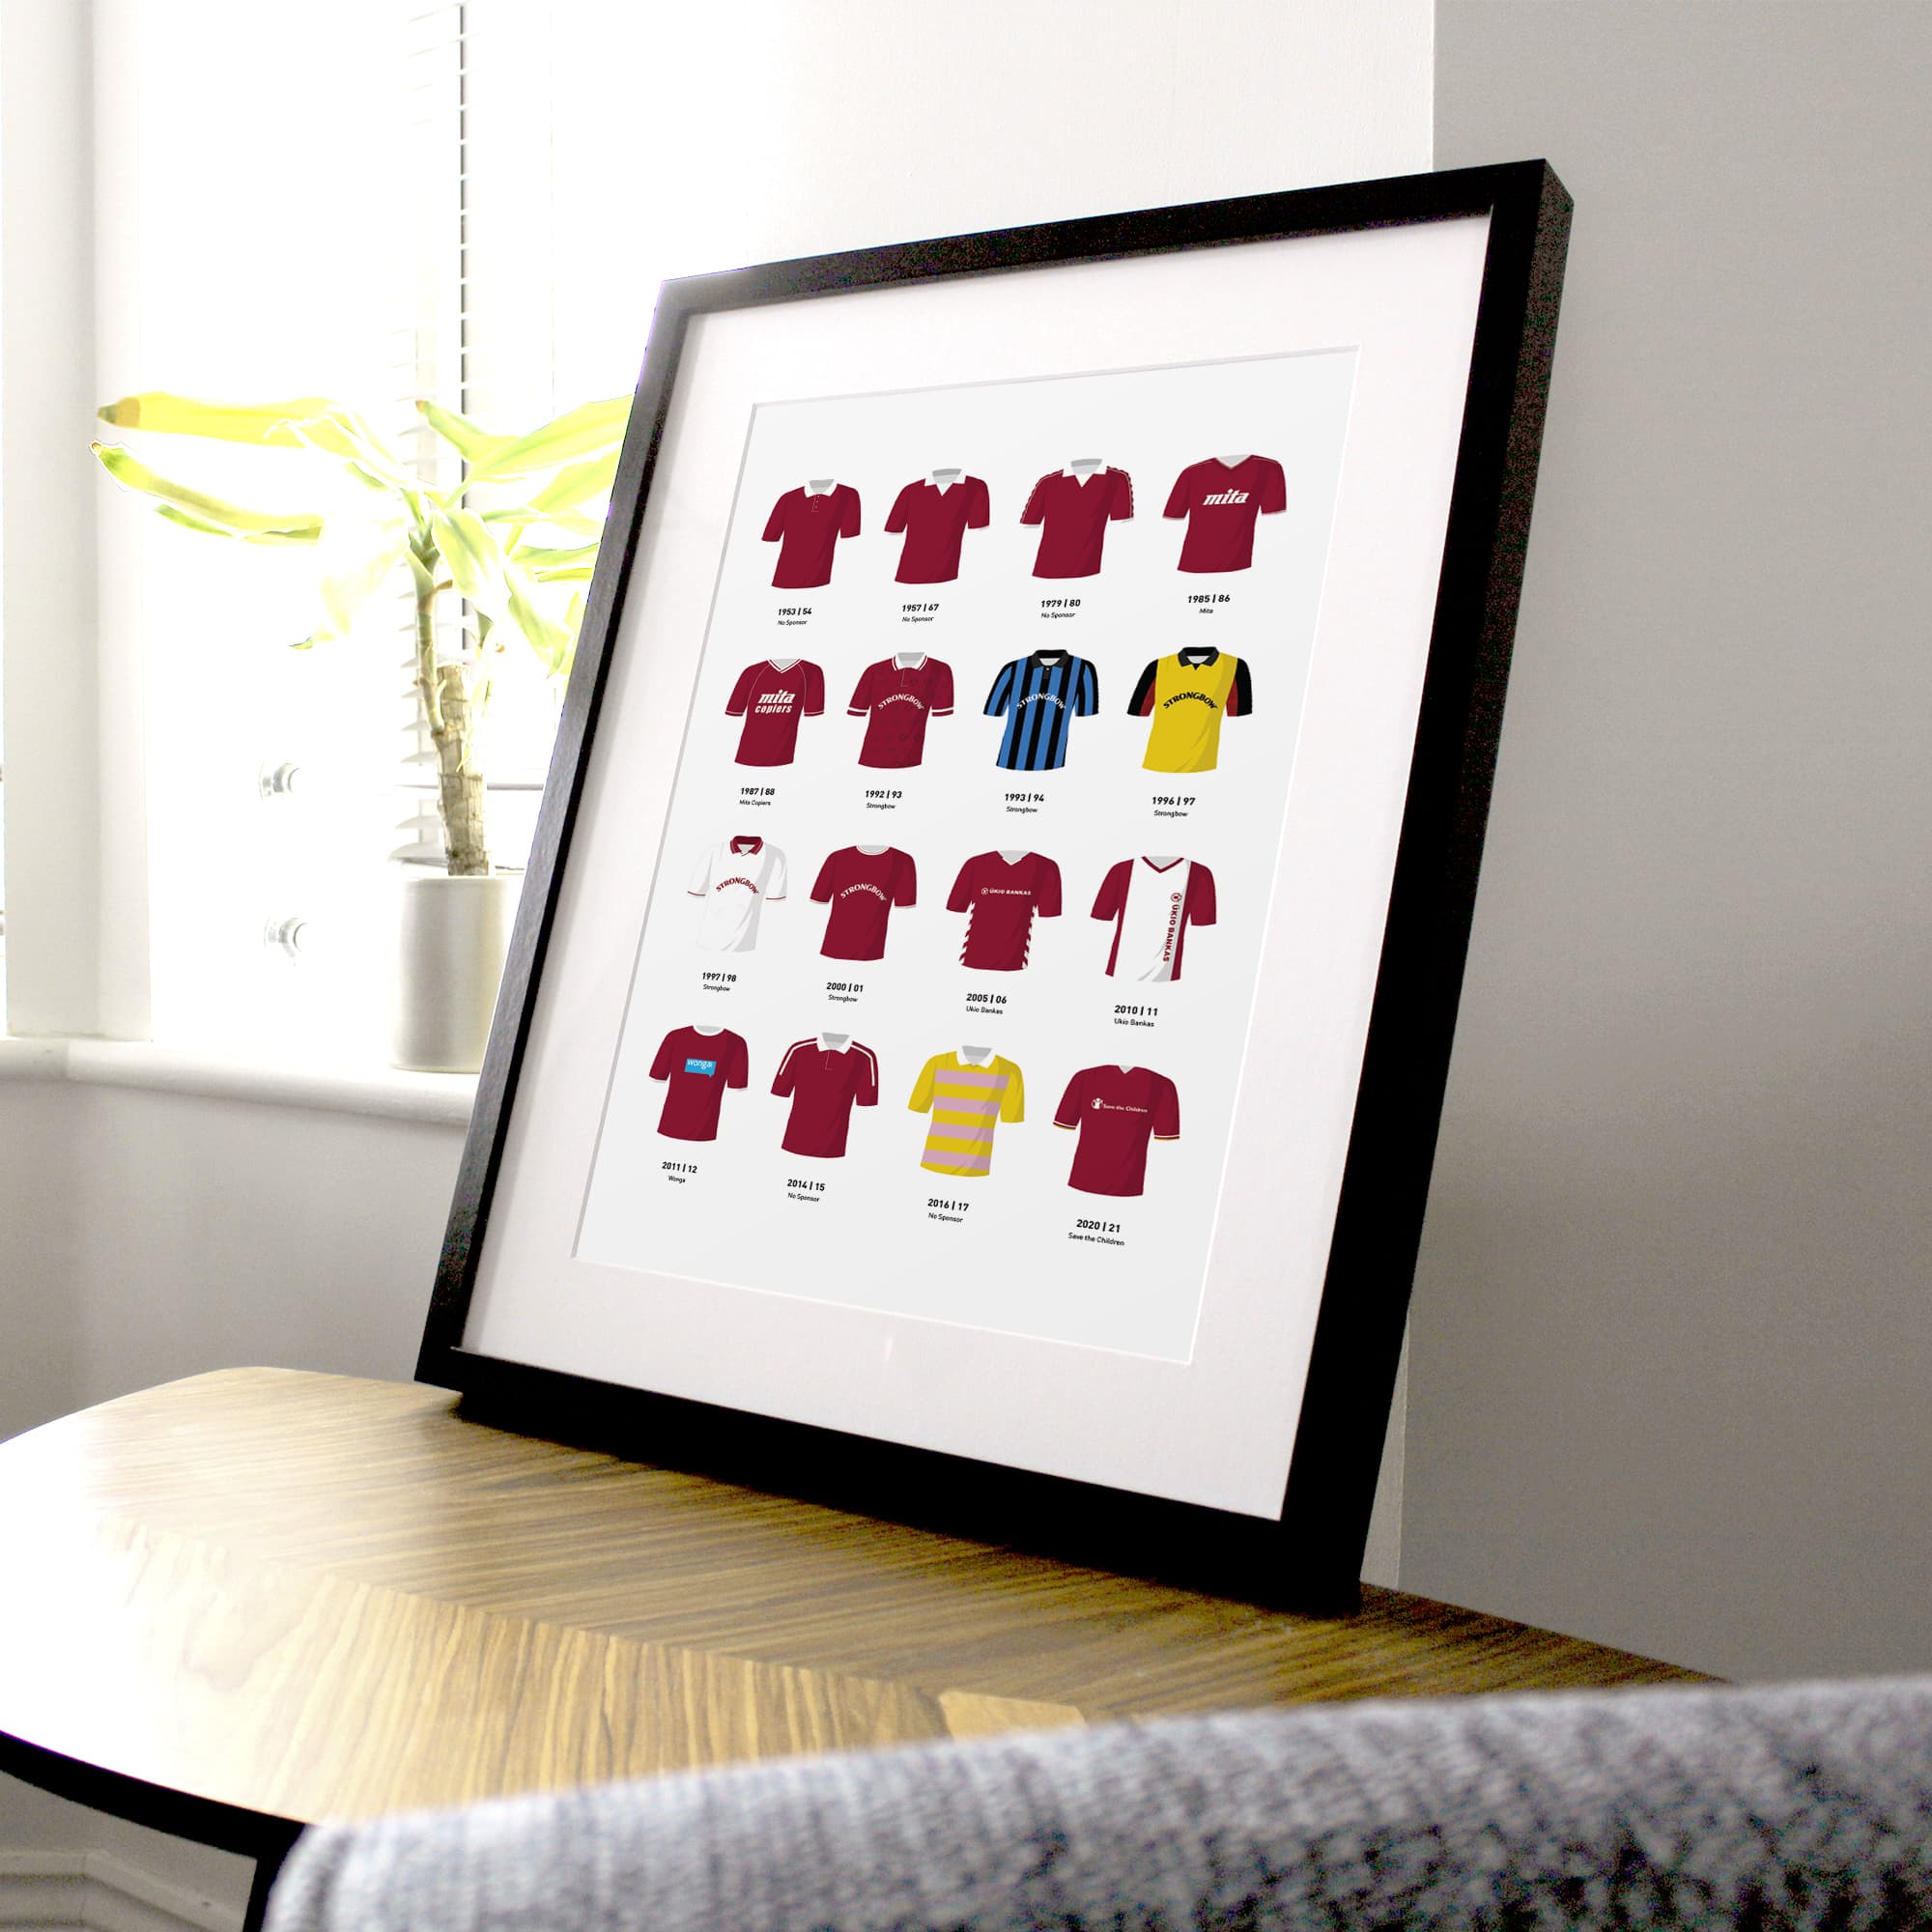 Hearts Classic Kits Football Team Print Good Team On Paper